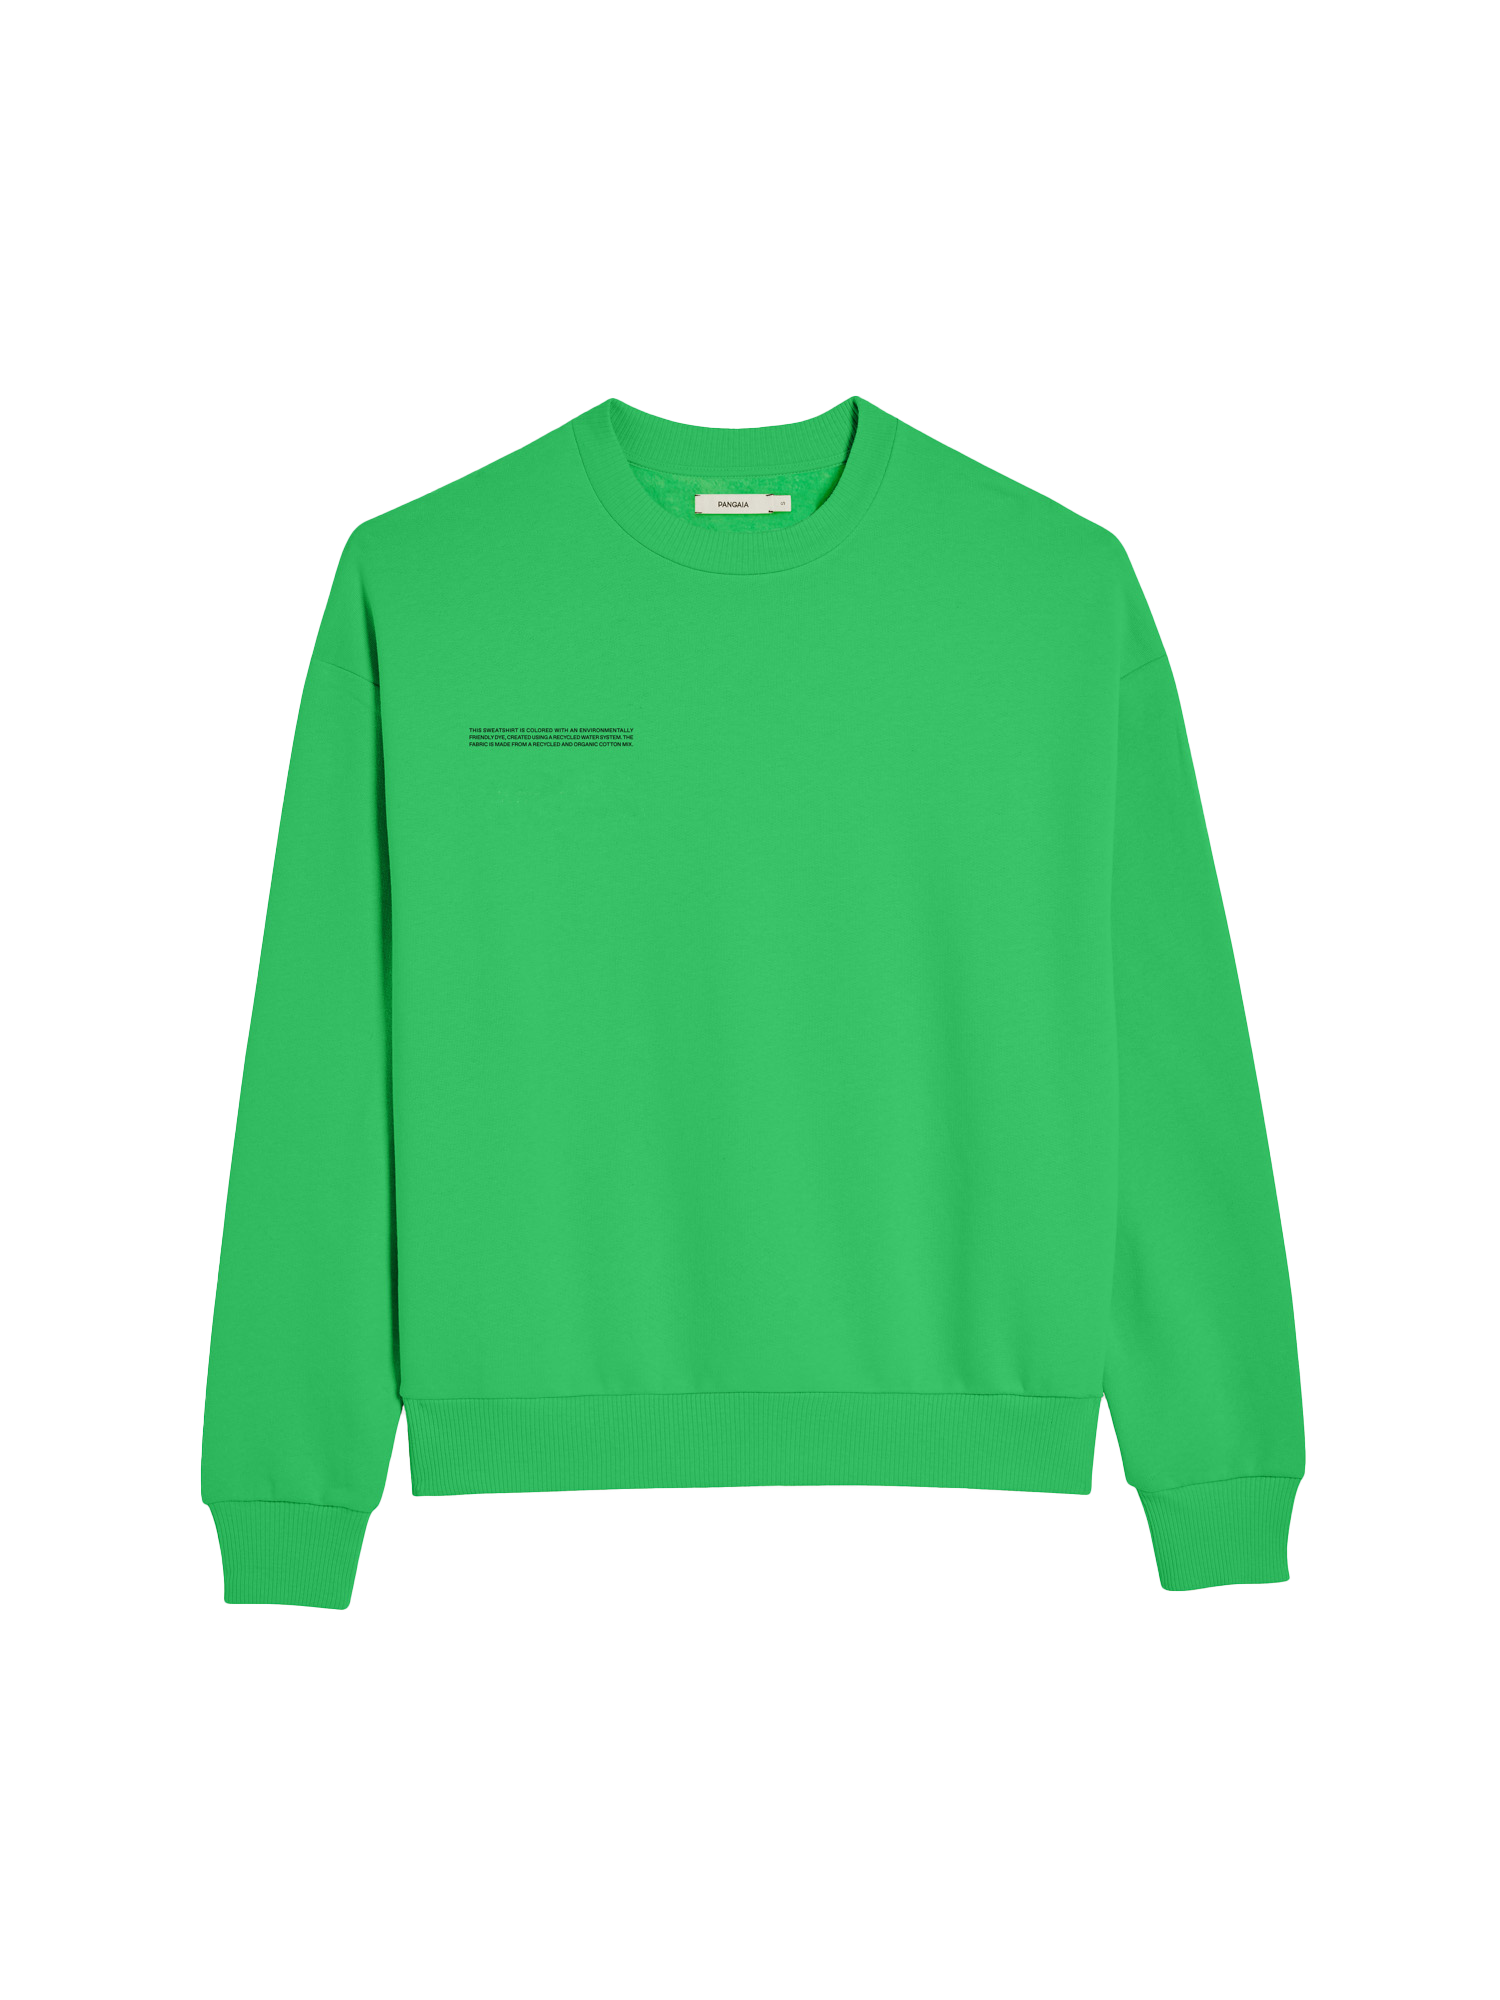 365 Signature Sweatshirt - Jade Green - Pangaia